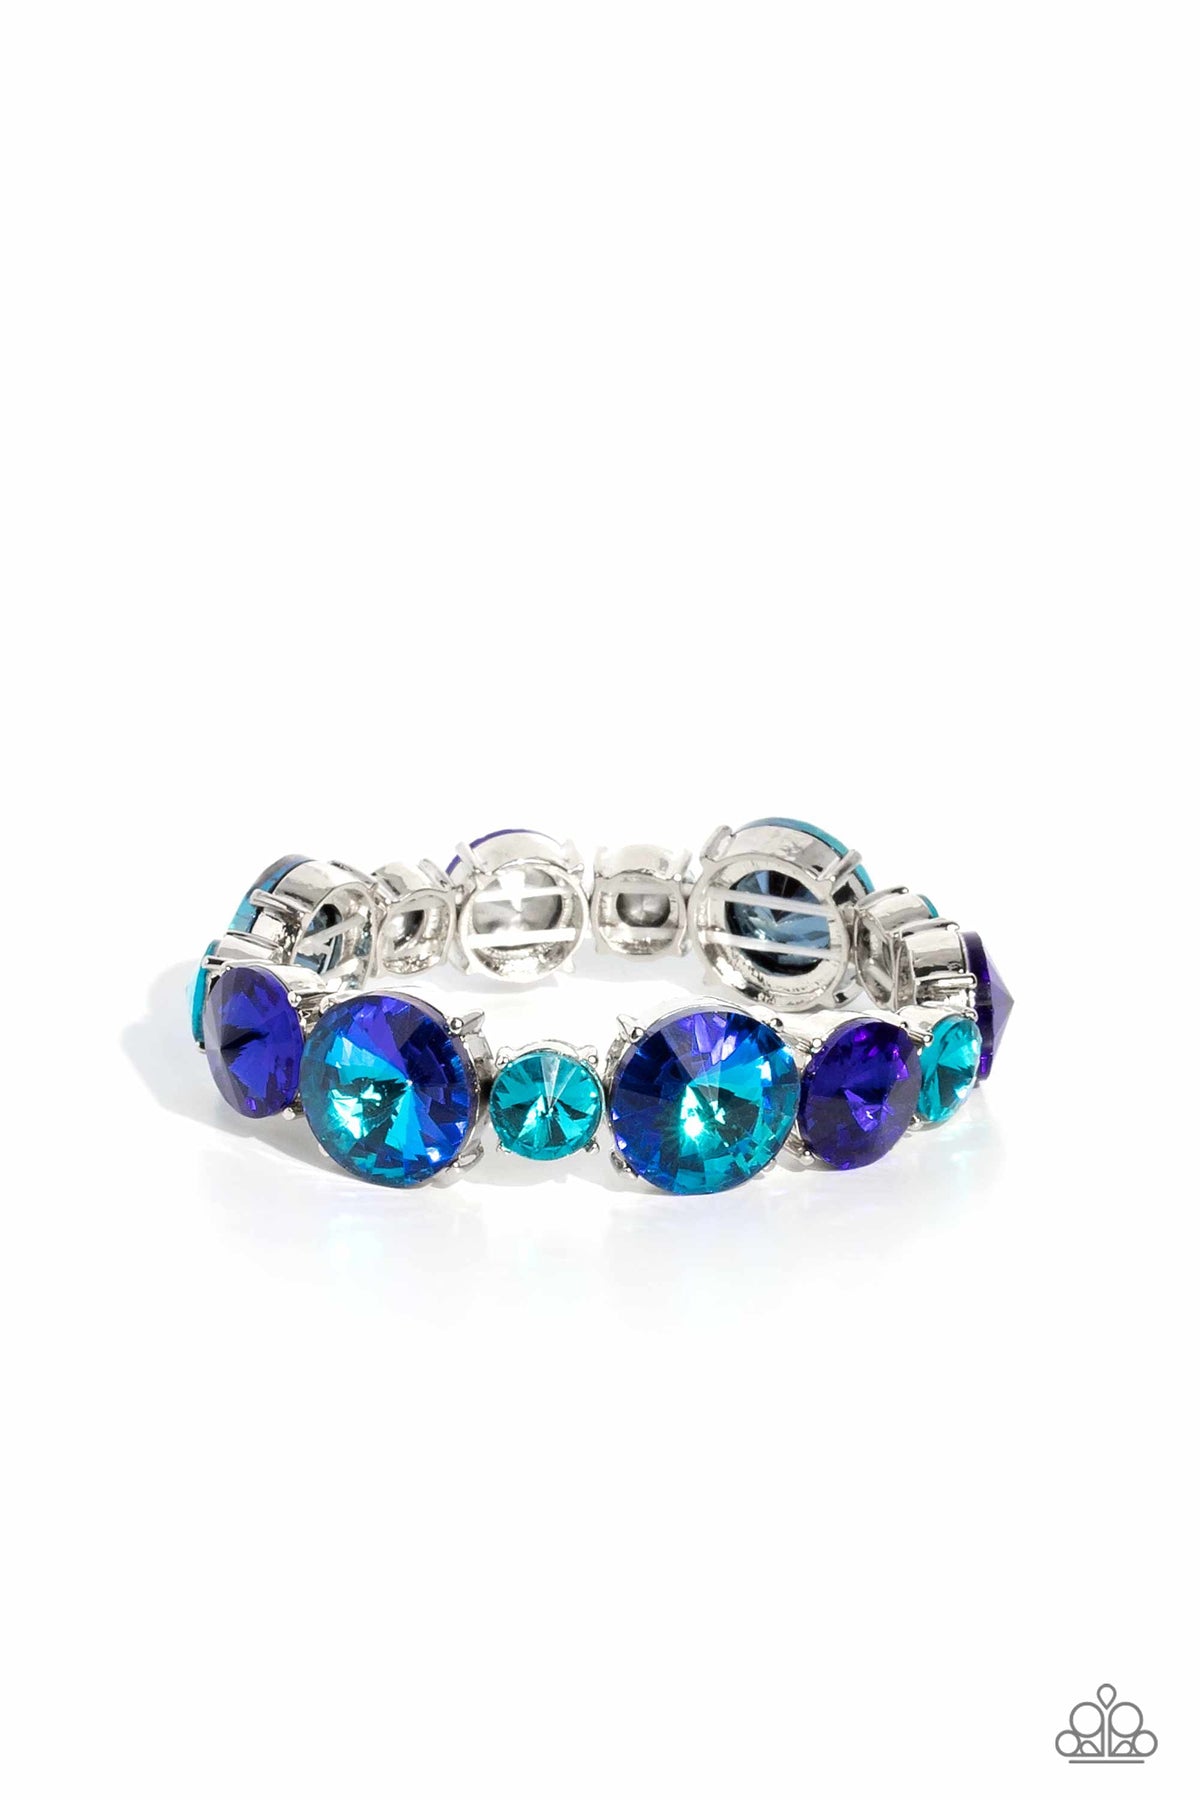 Refreshing Radiance Blue Rhinestone Bracelet - Paparazzi Accessories- lightbox - CarasShop.com - $5 Jewelry by Cara Jewels